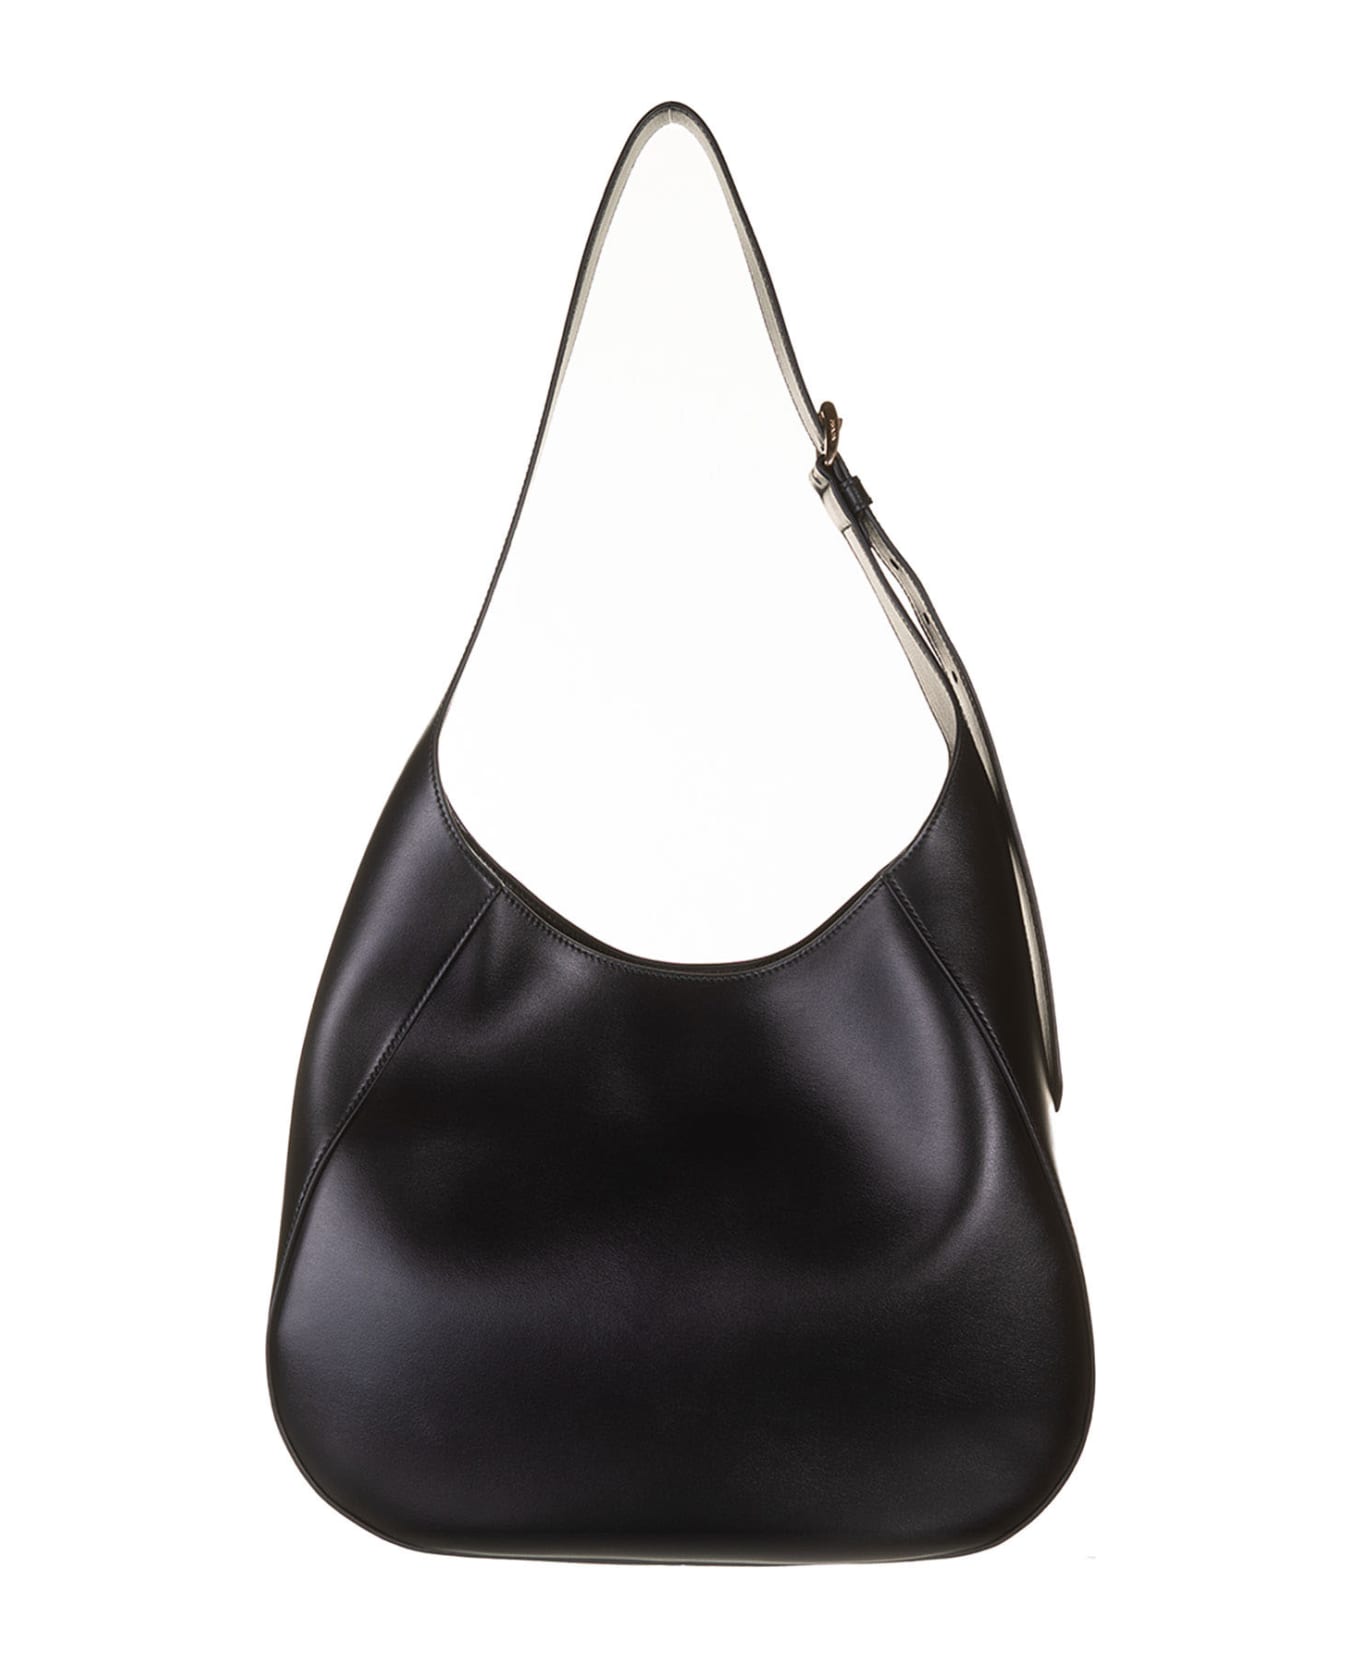 Prada Leather Shoulder Bag With Triangle Logo - NERO